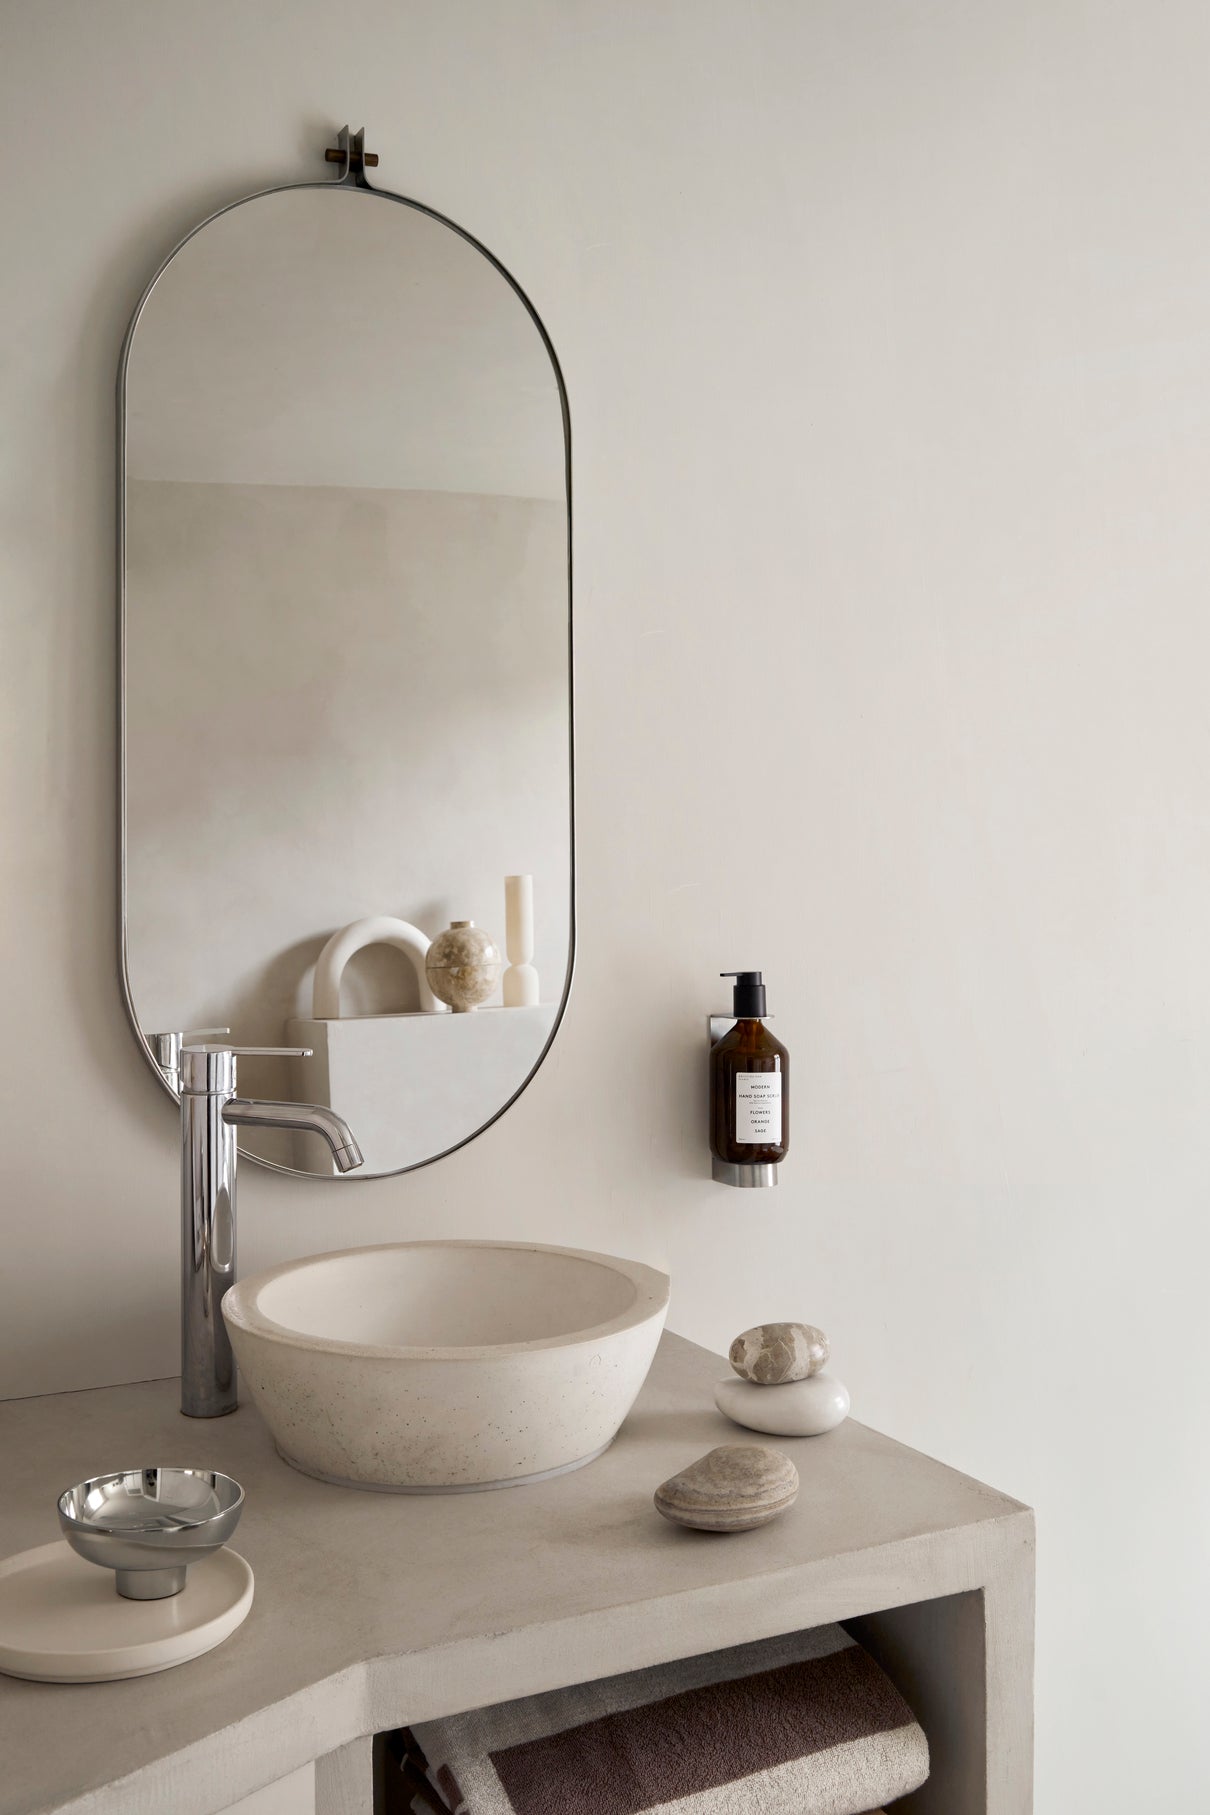 Dowel Mirror Long by Kristina Dam. Mirror in round capsule shape in a bathroom interior setting.